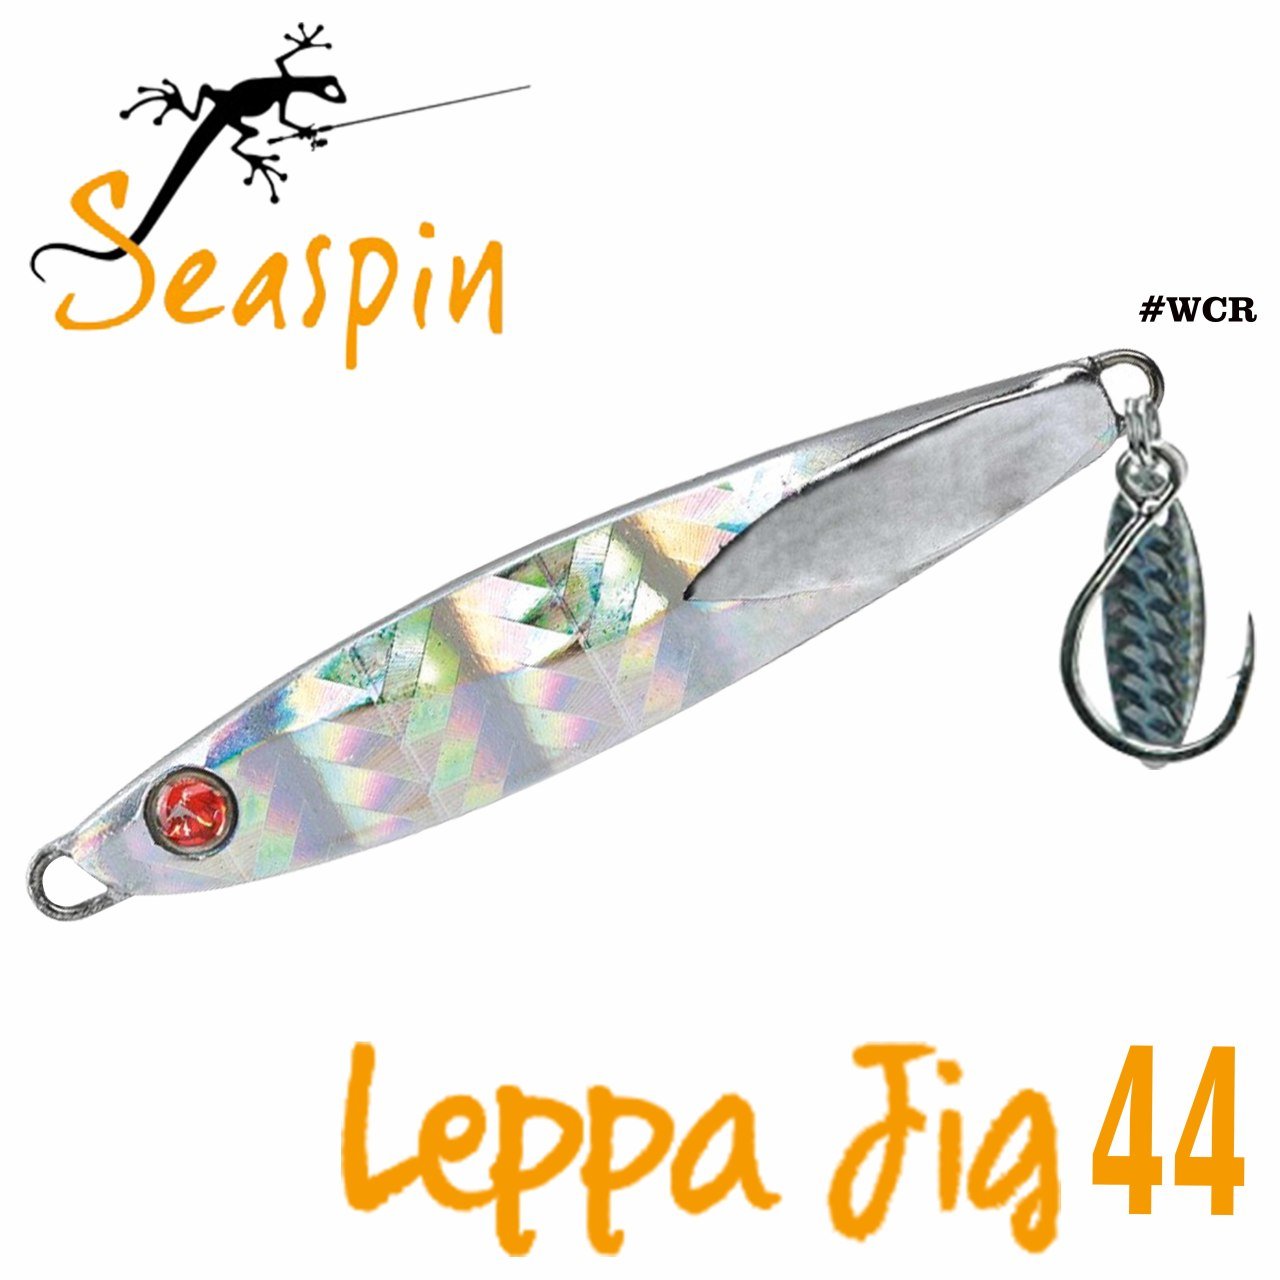 Seaspin Leppa 44gr jig yem #WCR